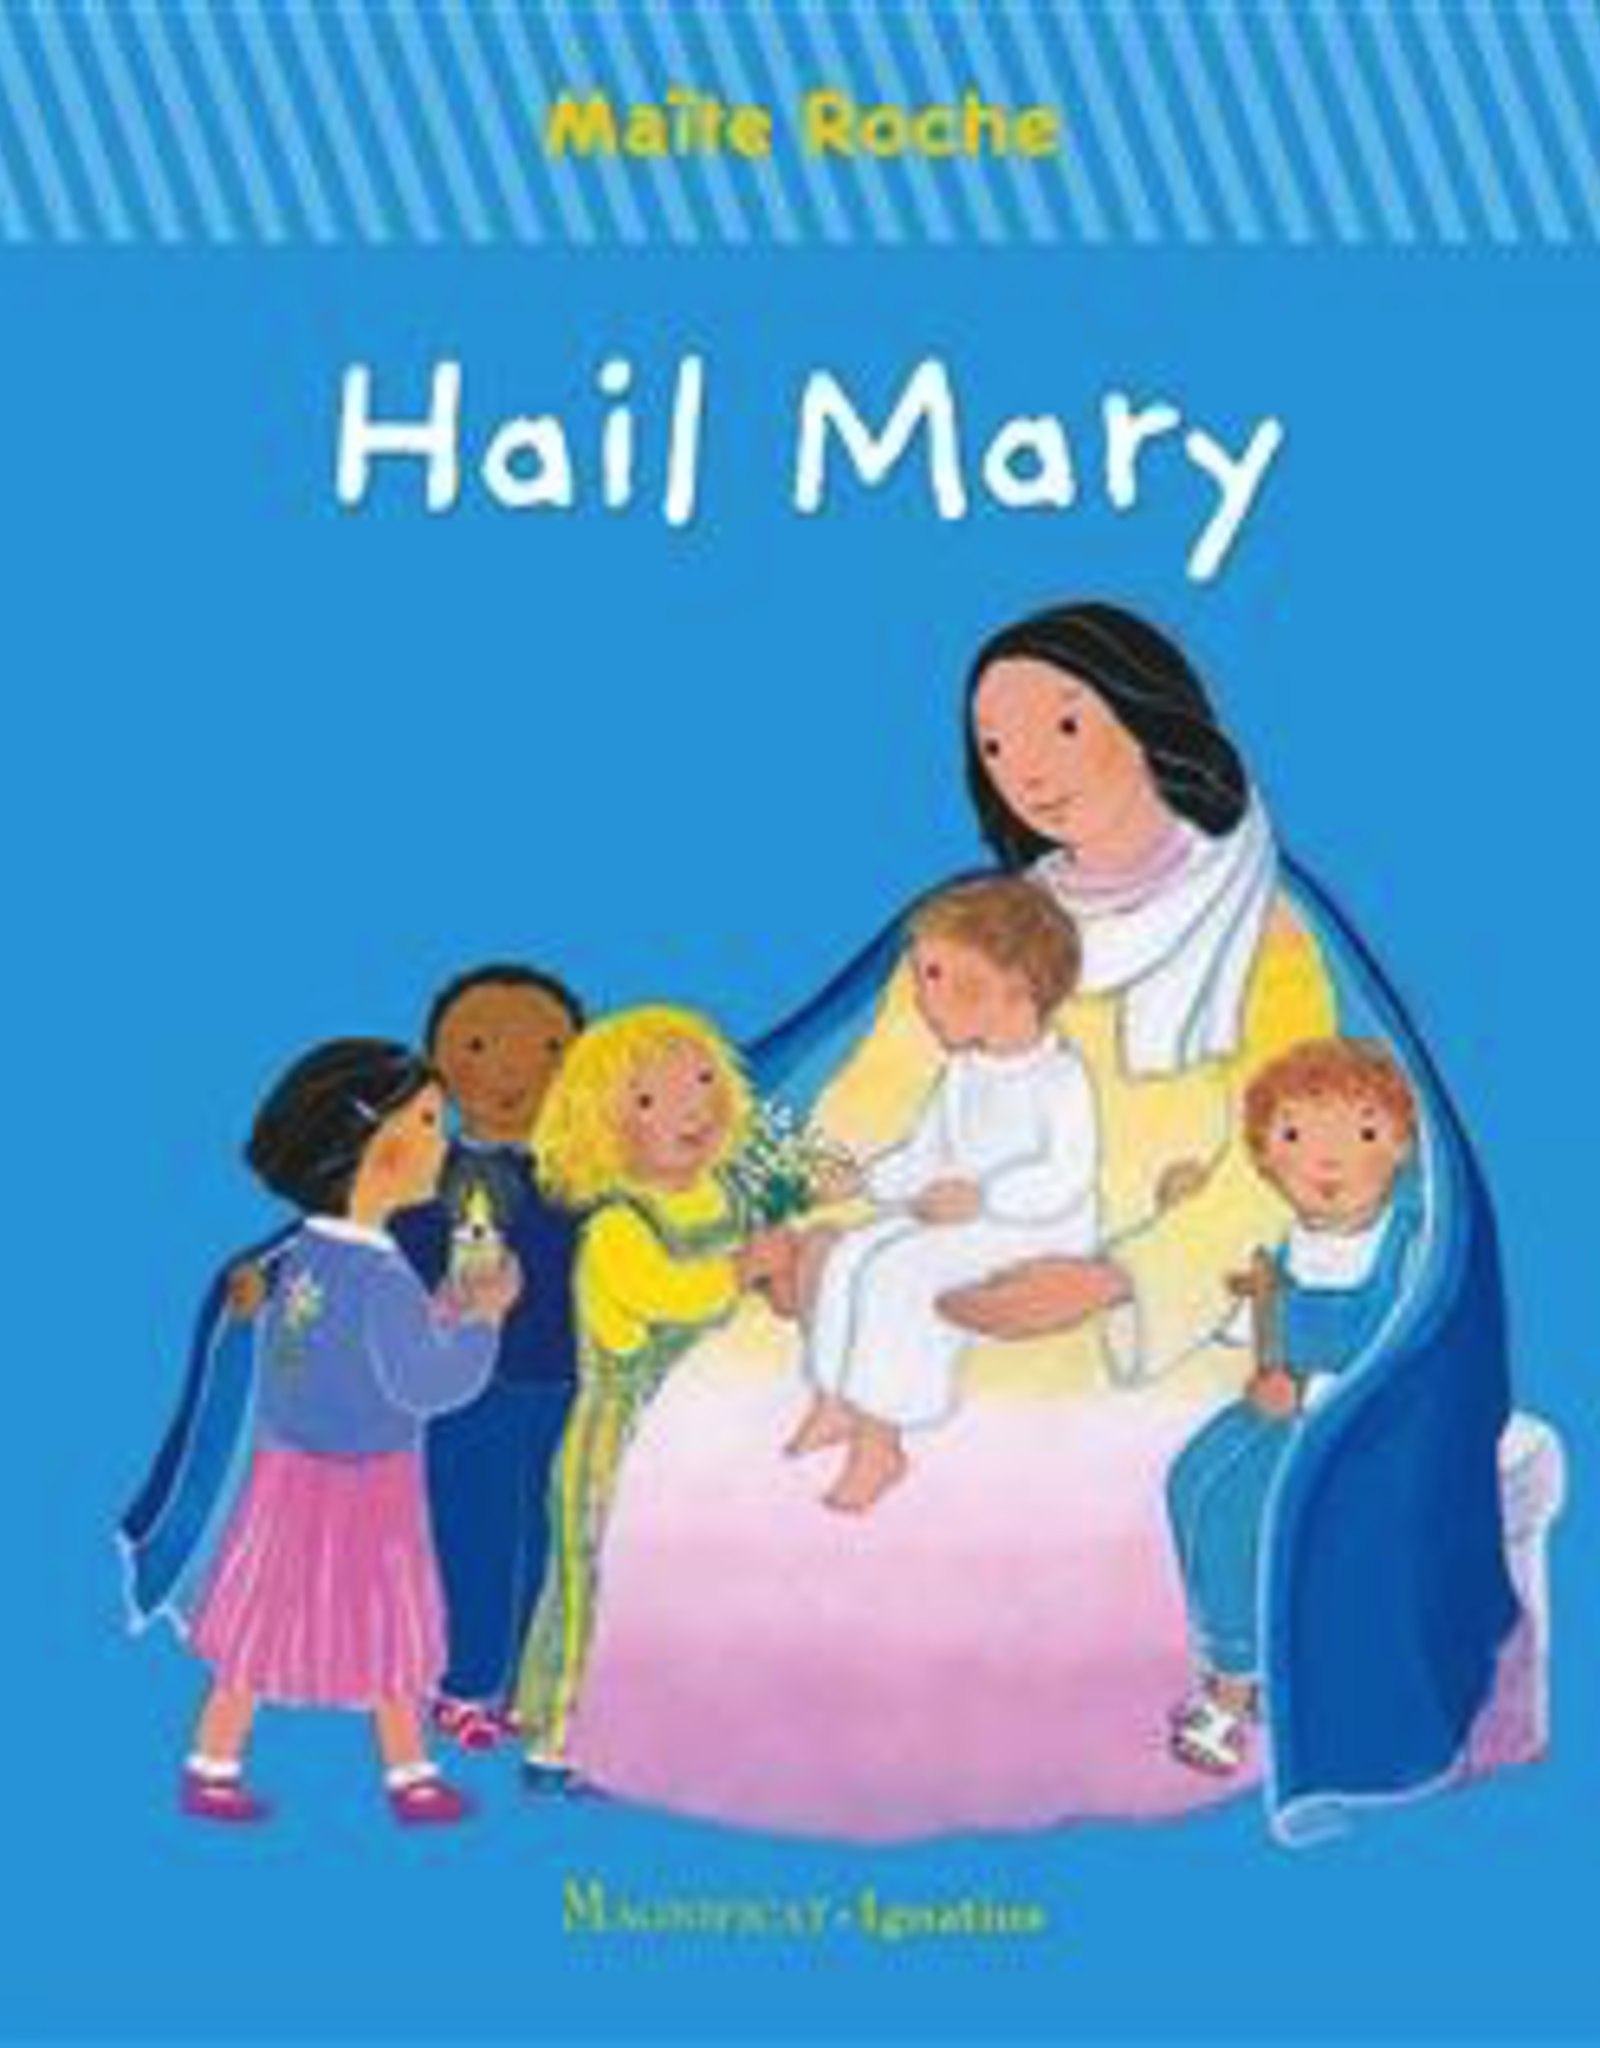 Ignatius Press Hail Mary, by Maite Roche (hardback/boardbook)